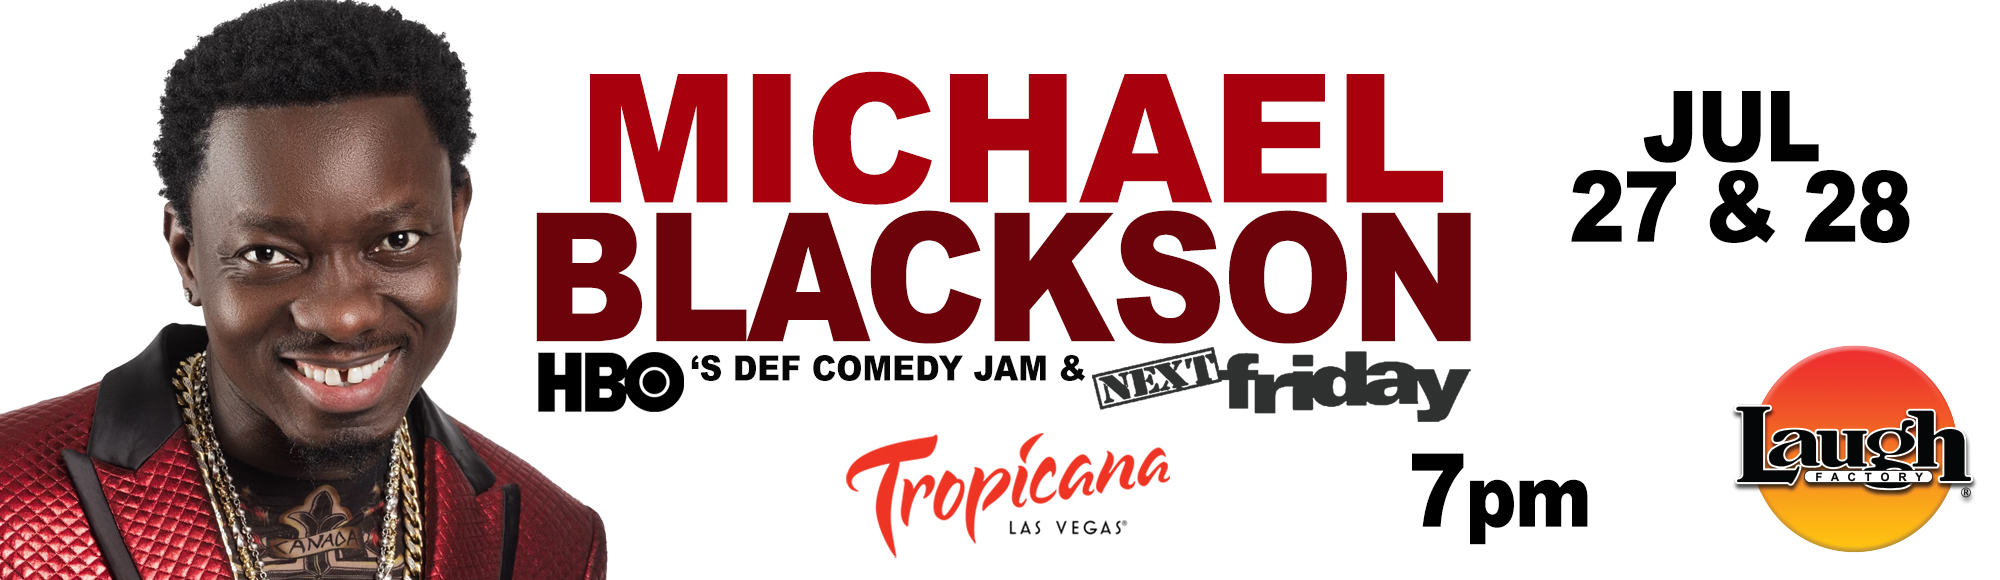 Michael Blackson Show Las Vegas Tickets & Reviews